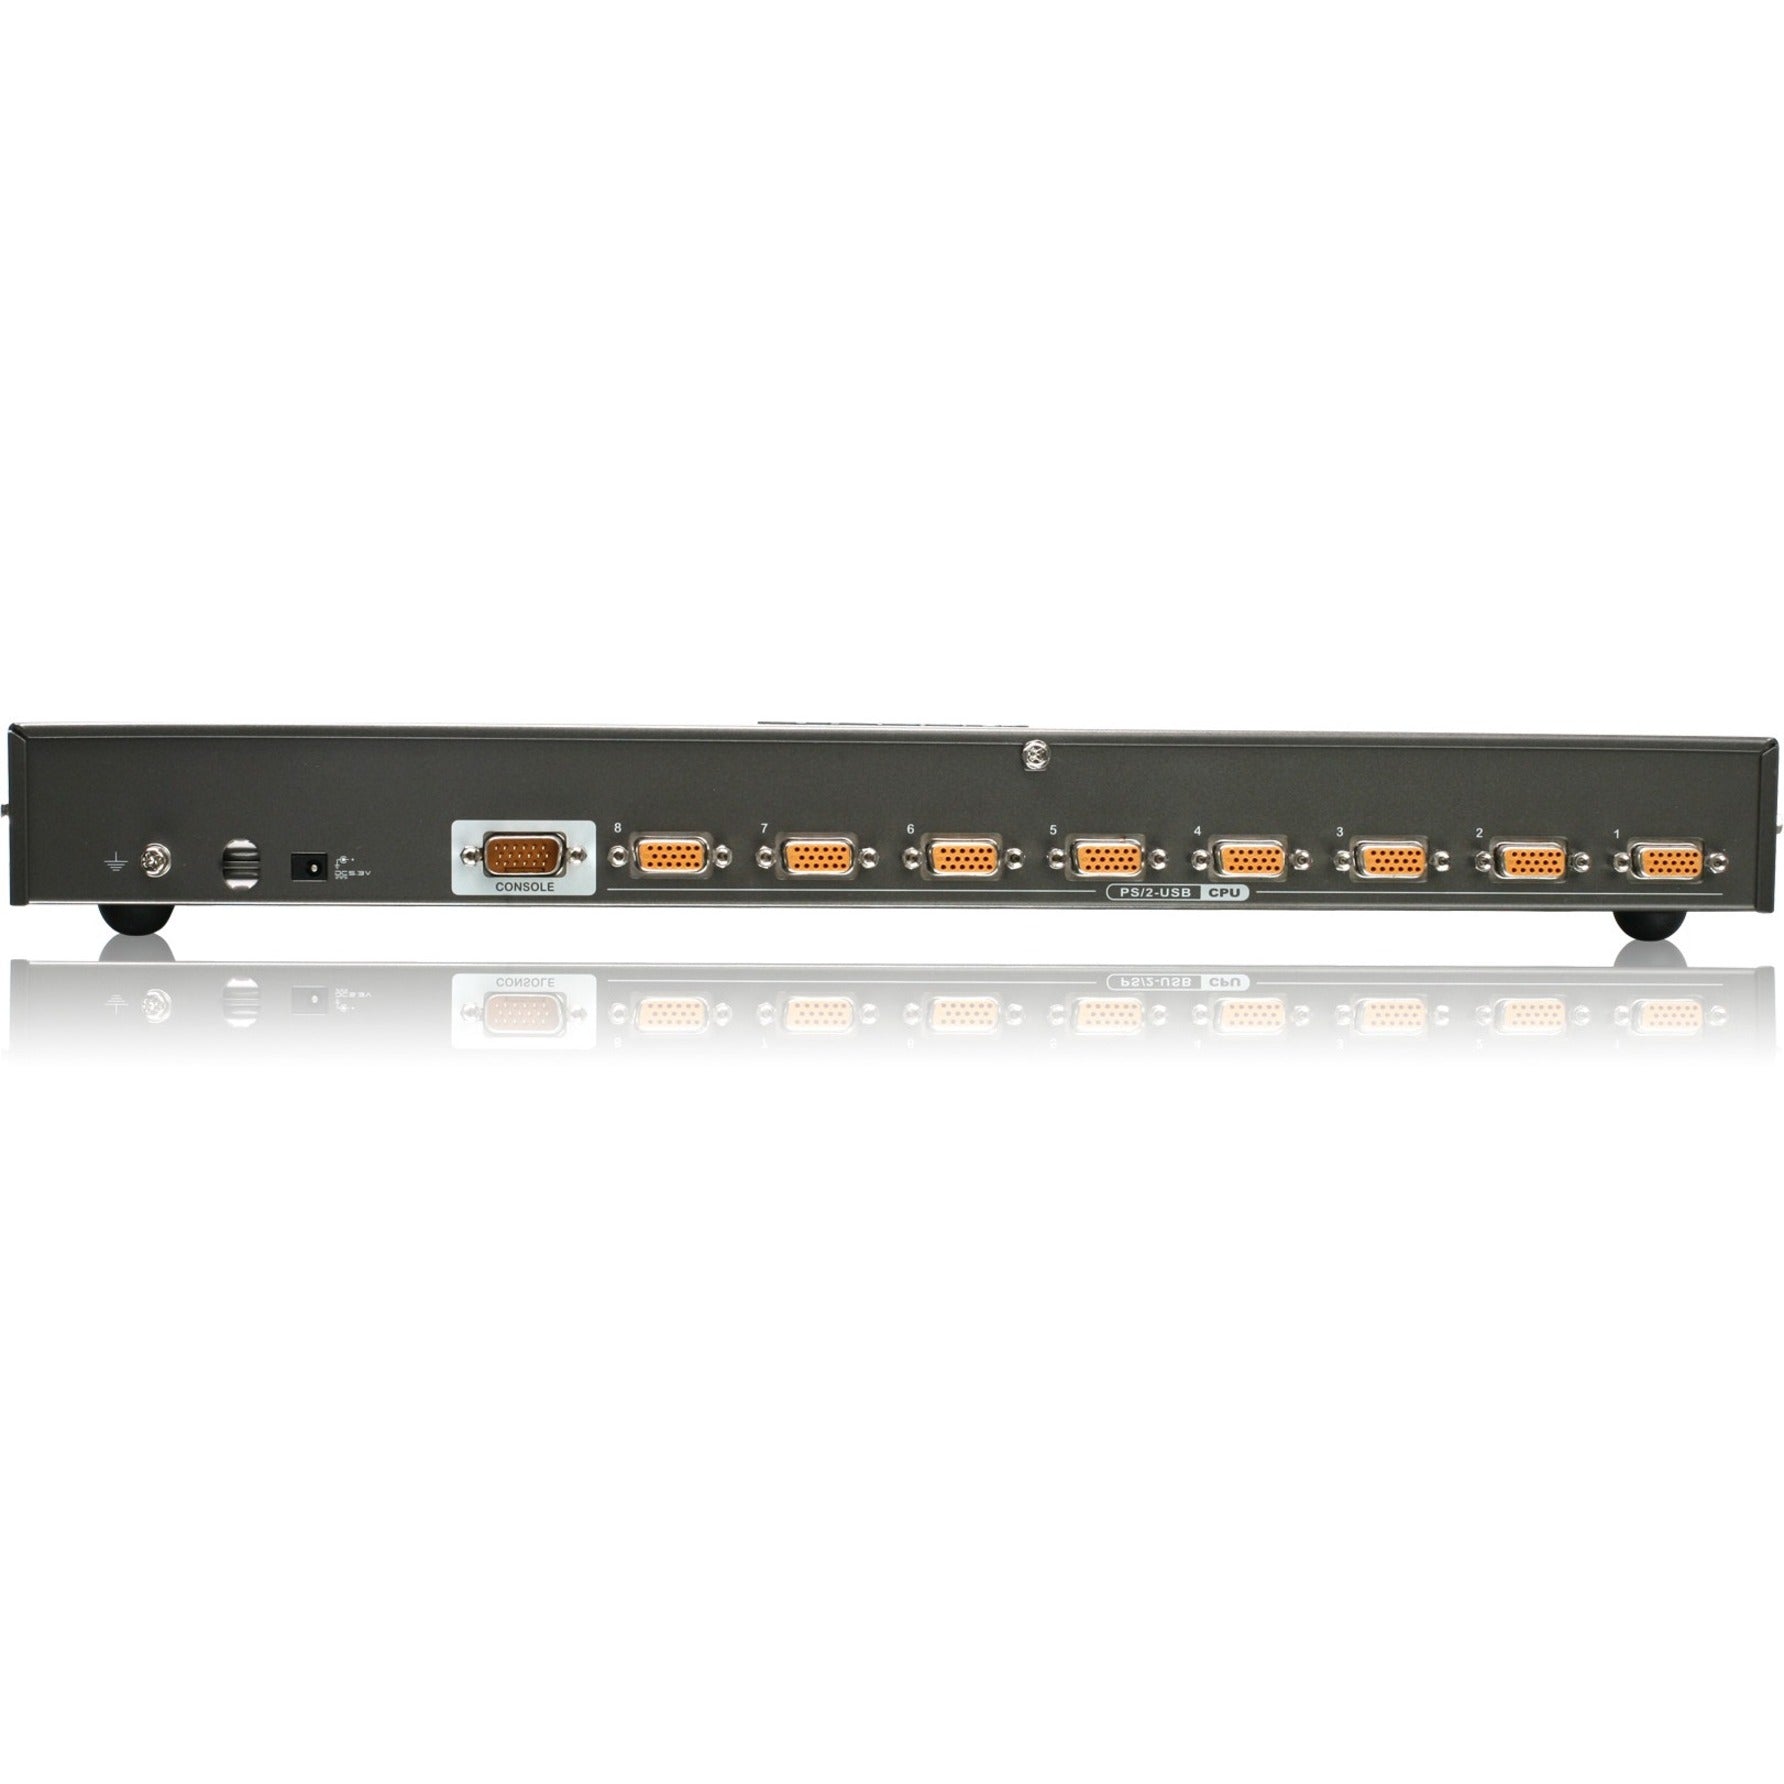 IOGEAR GCS1808KITUTAA 8-Port USB PS/2 Combo VGA KVM Switch with USB KVM Cables, 2048 x 1536 Maximum Video Resolution, 3 Year Limited Warranty